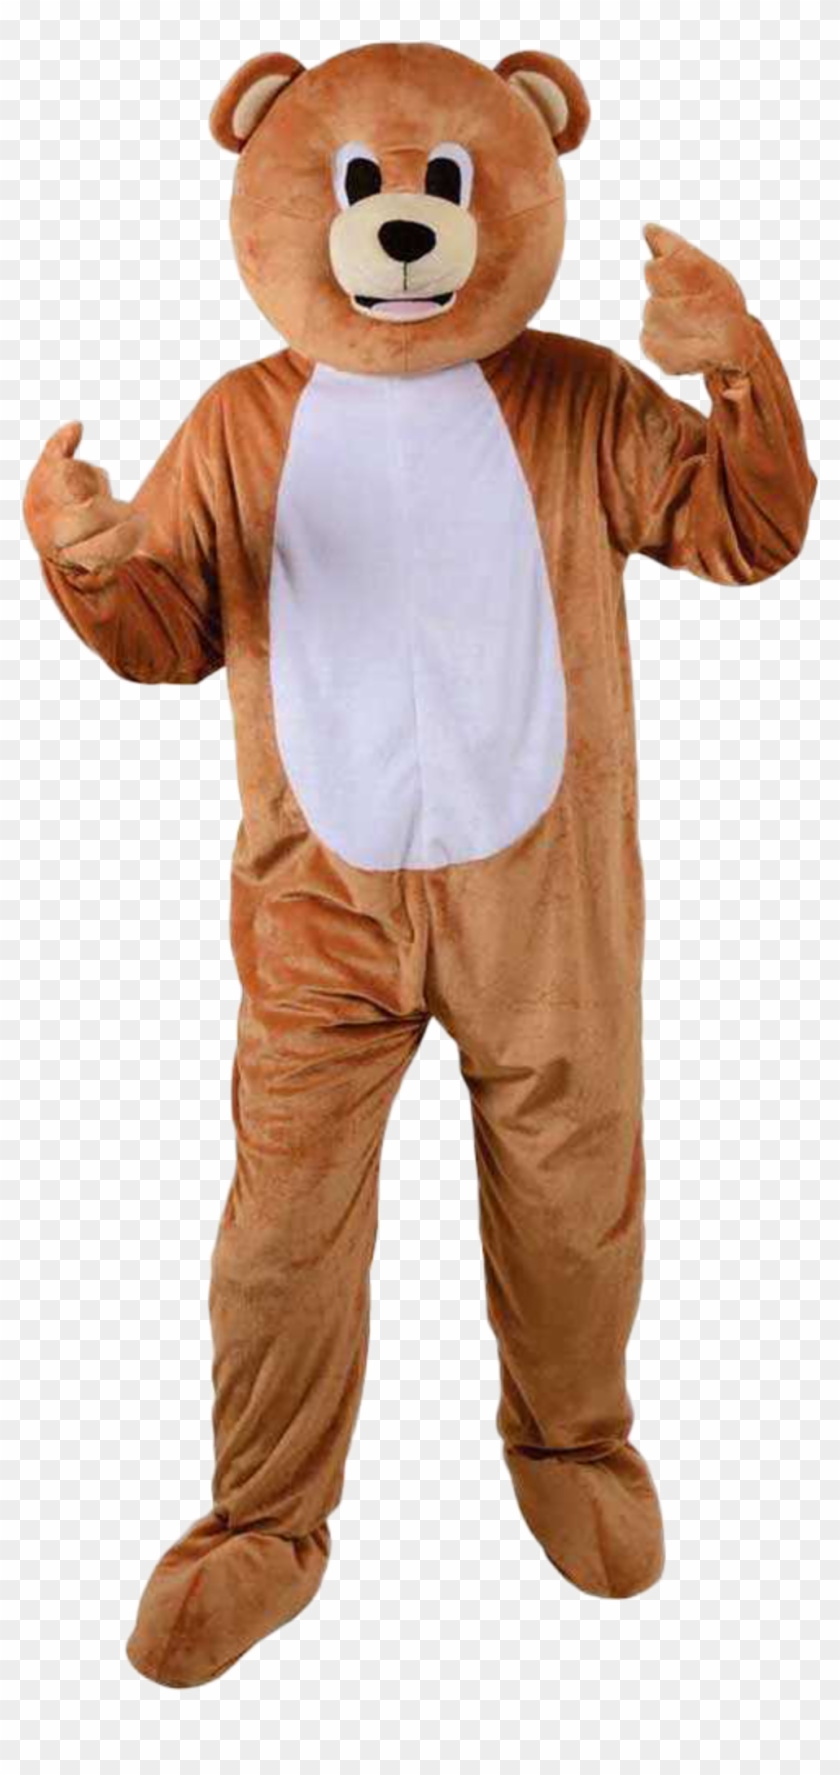 Man In Teddy Bear Costume Clipart #5698837